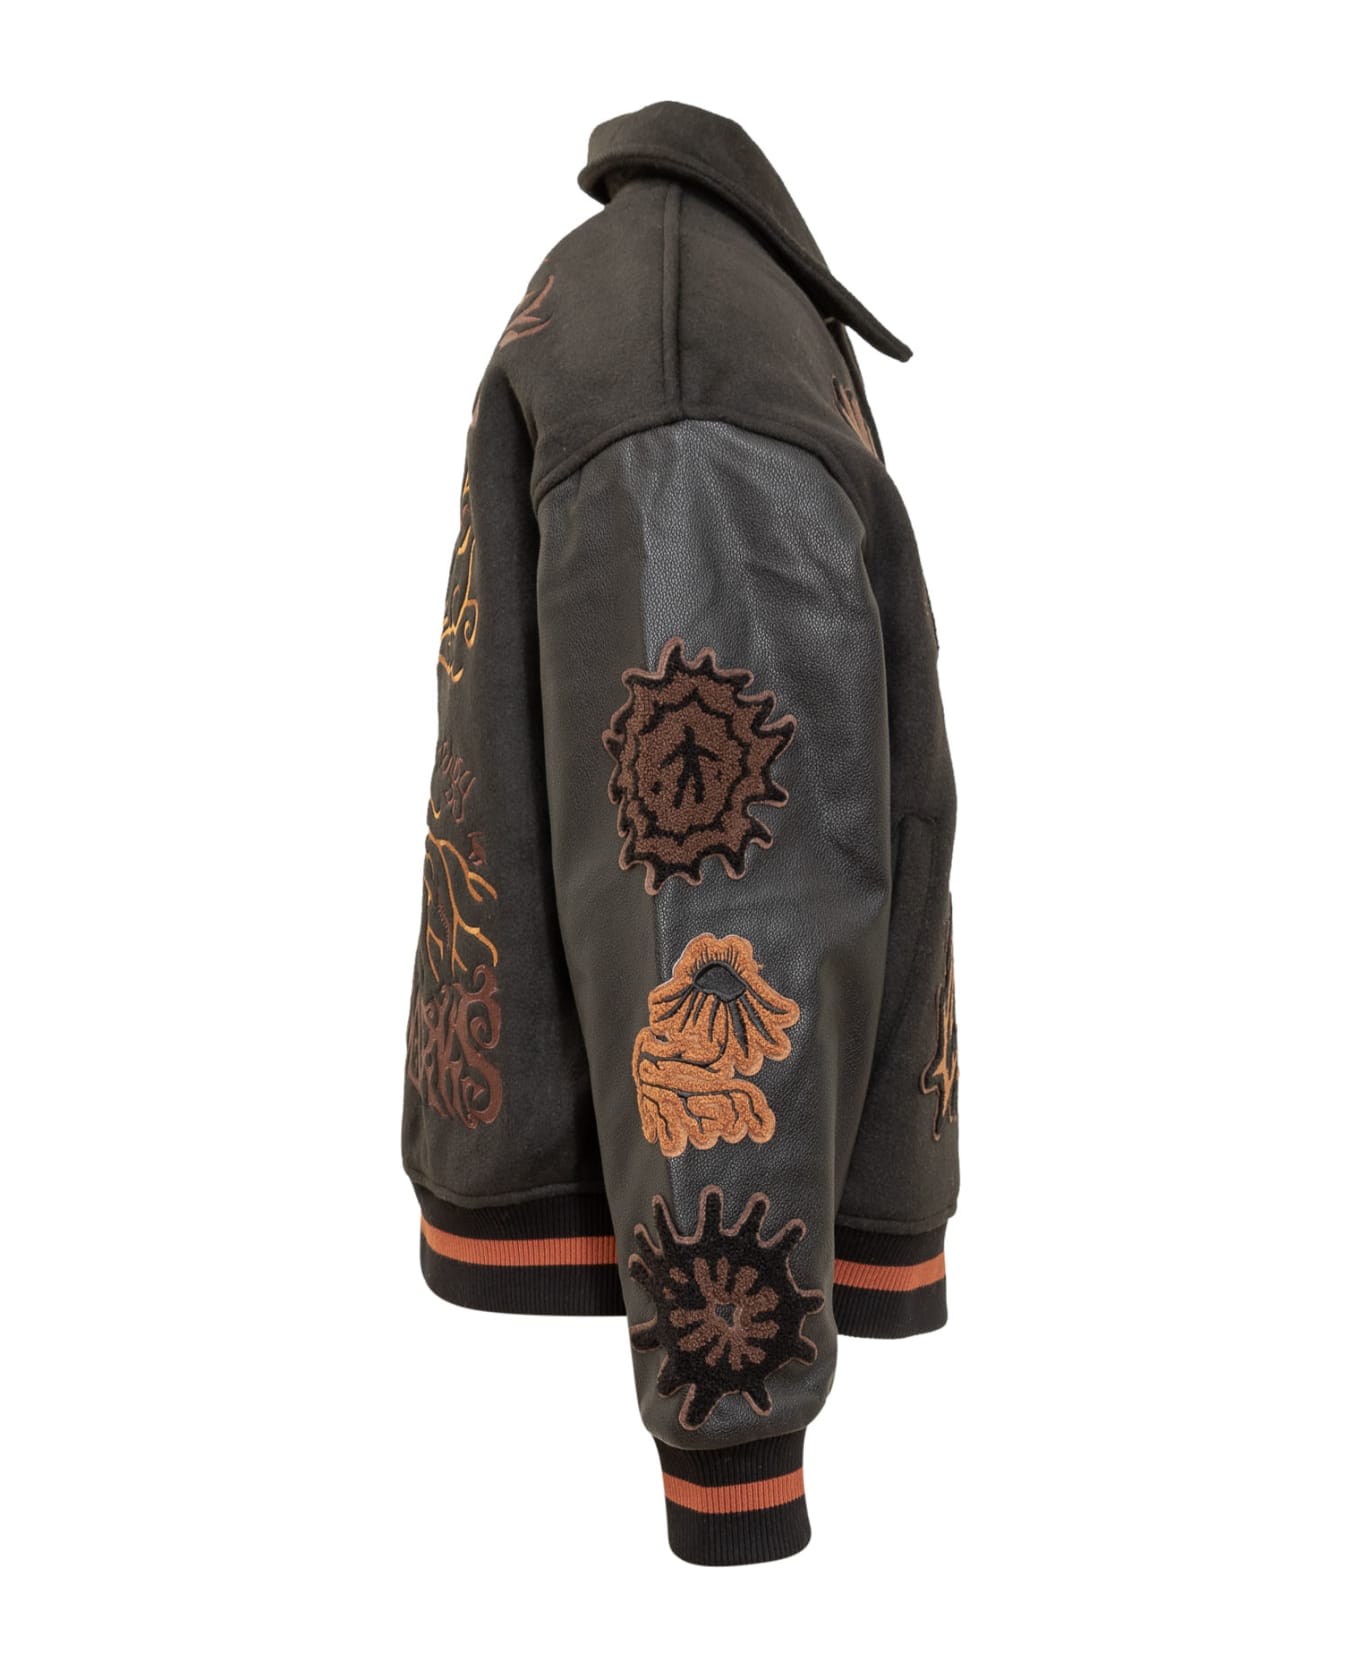 Untitled Artworks Varsity Jacket - BLACK ジャケット